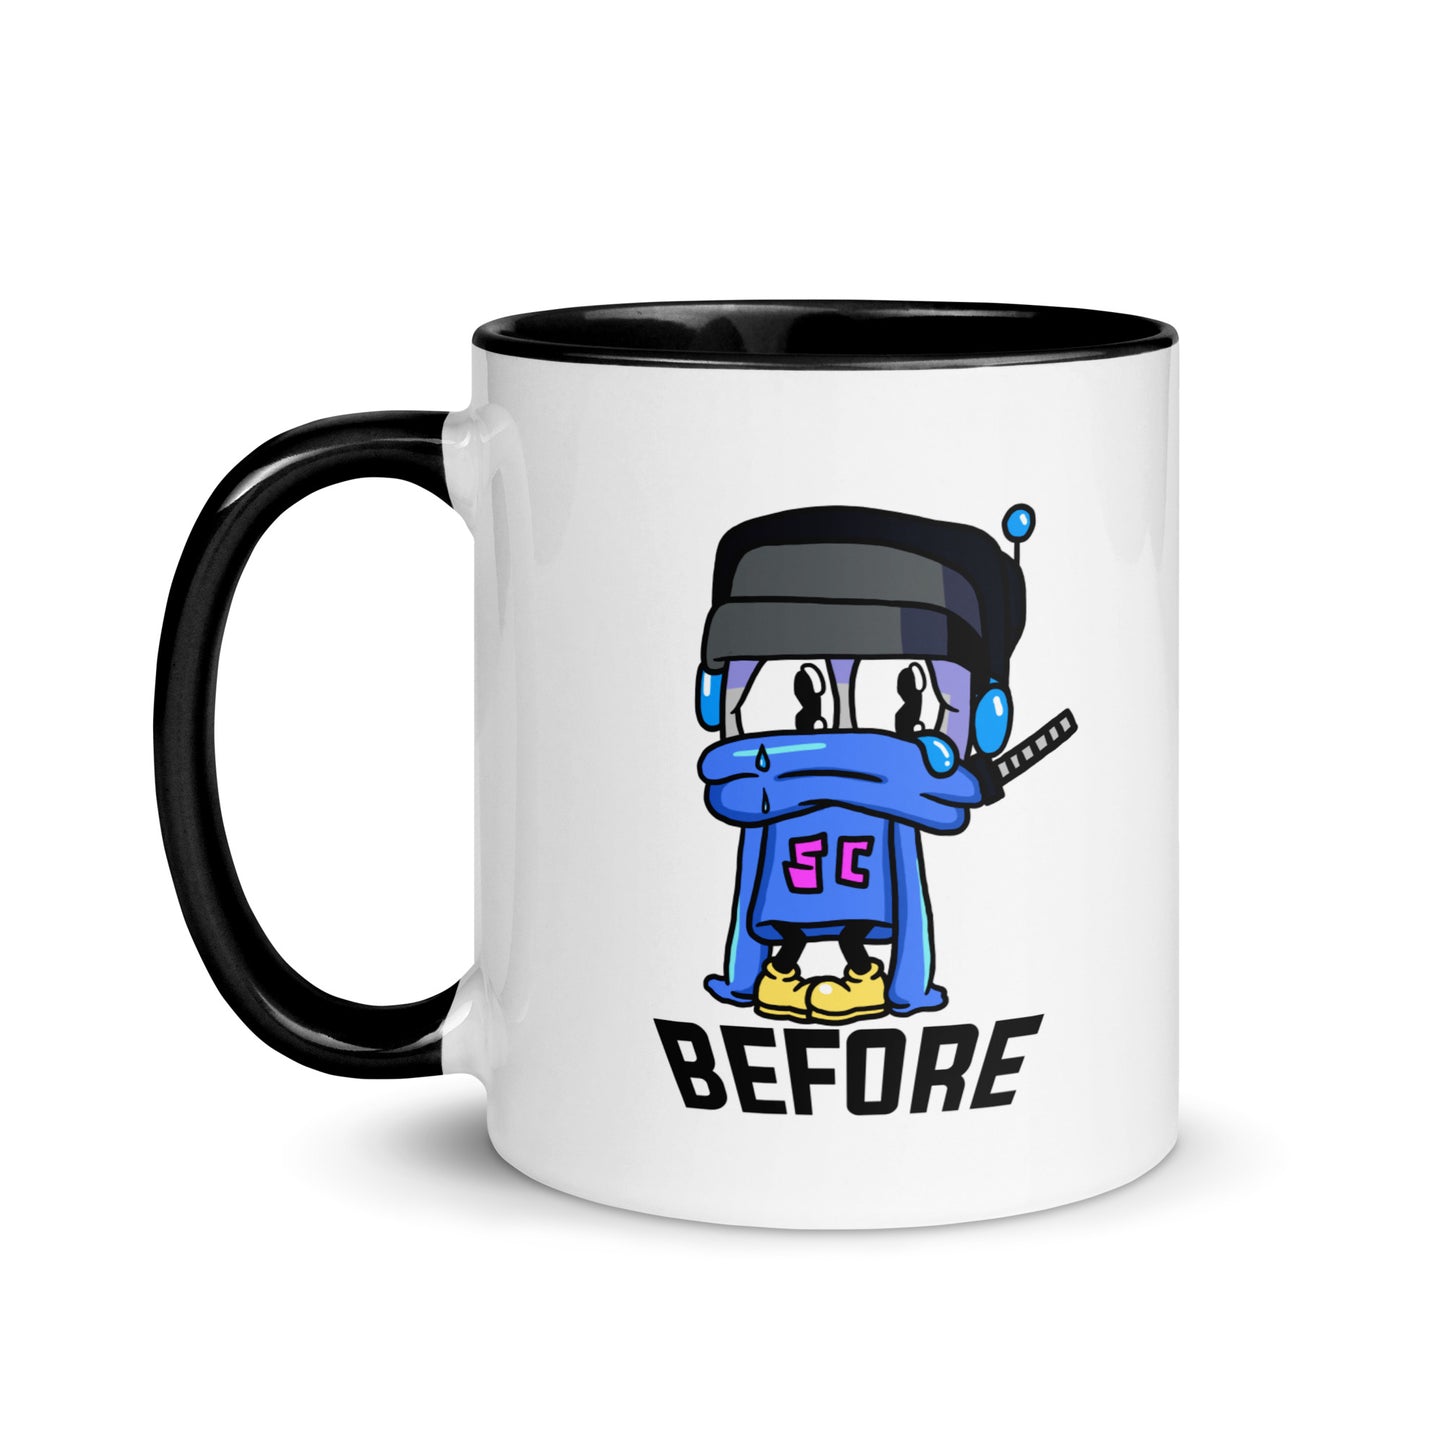 Before & After - Mug